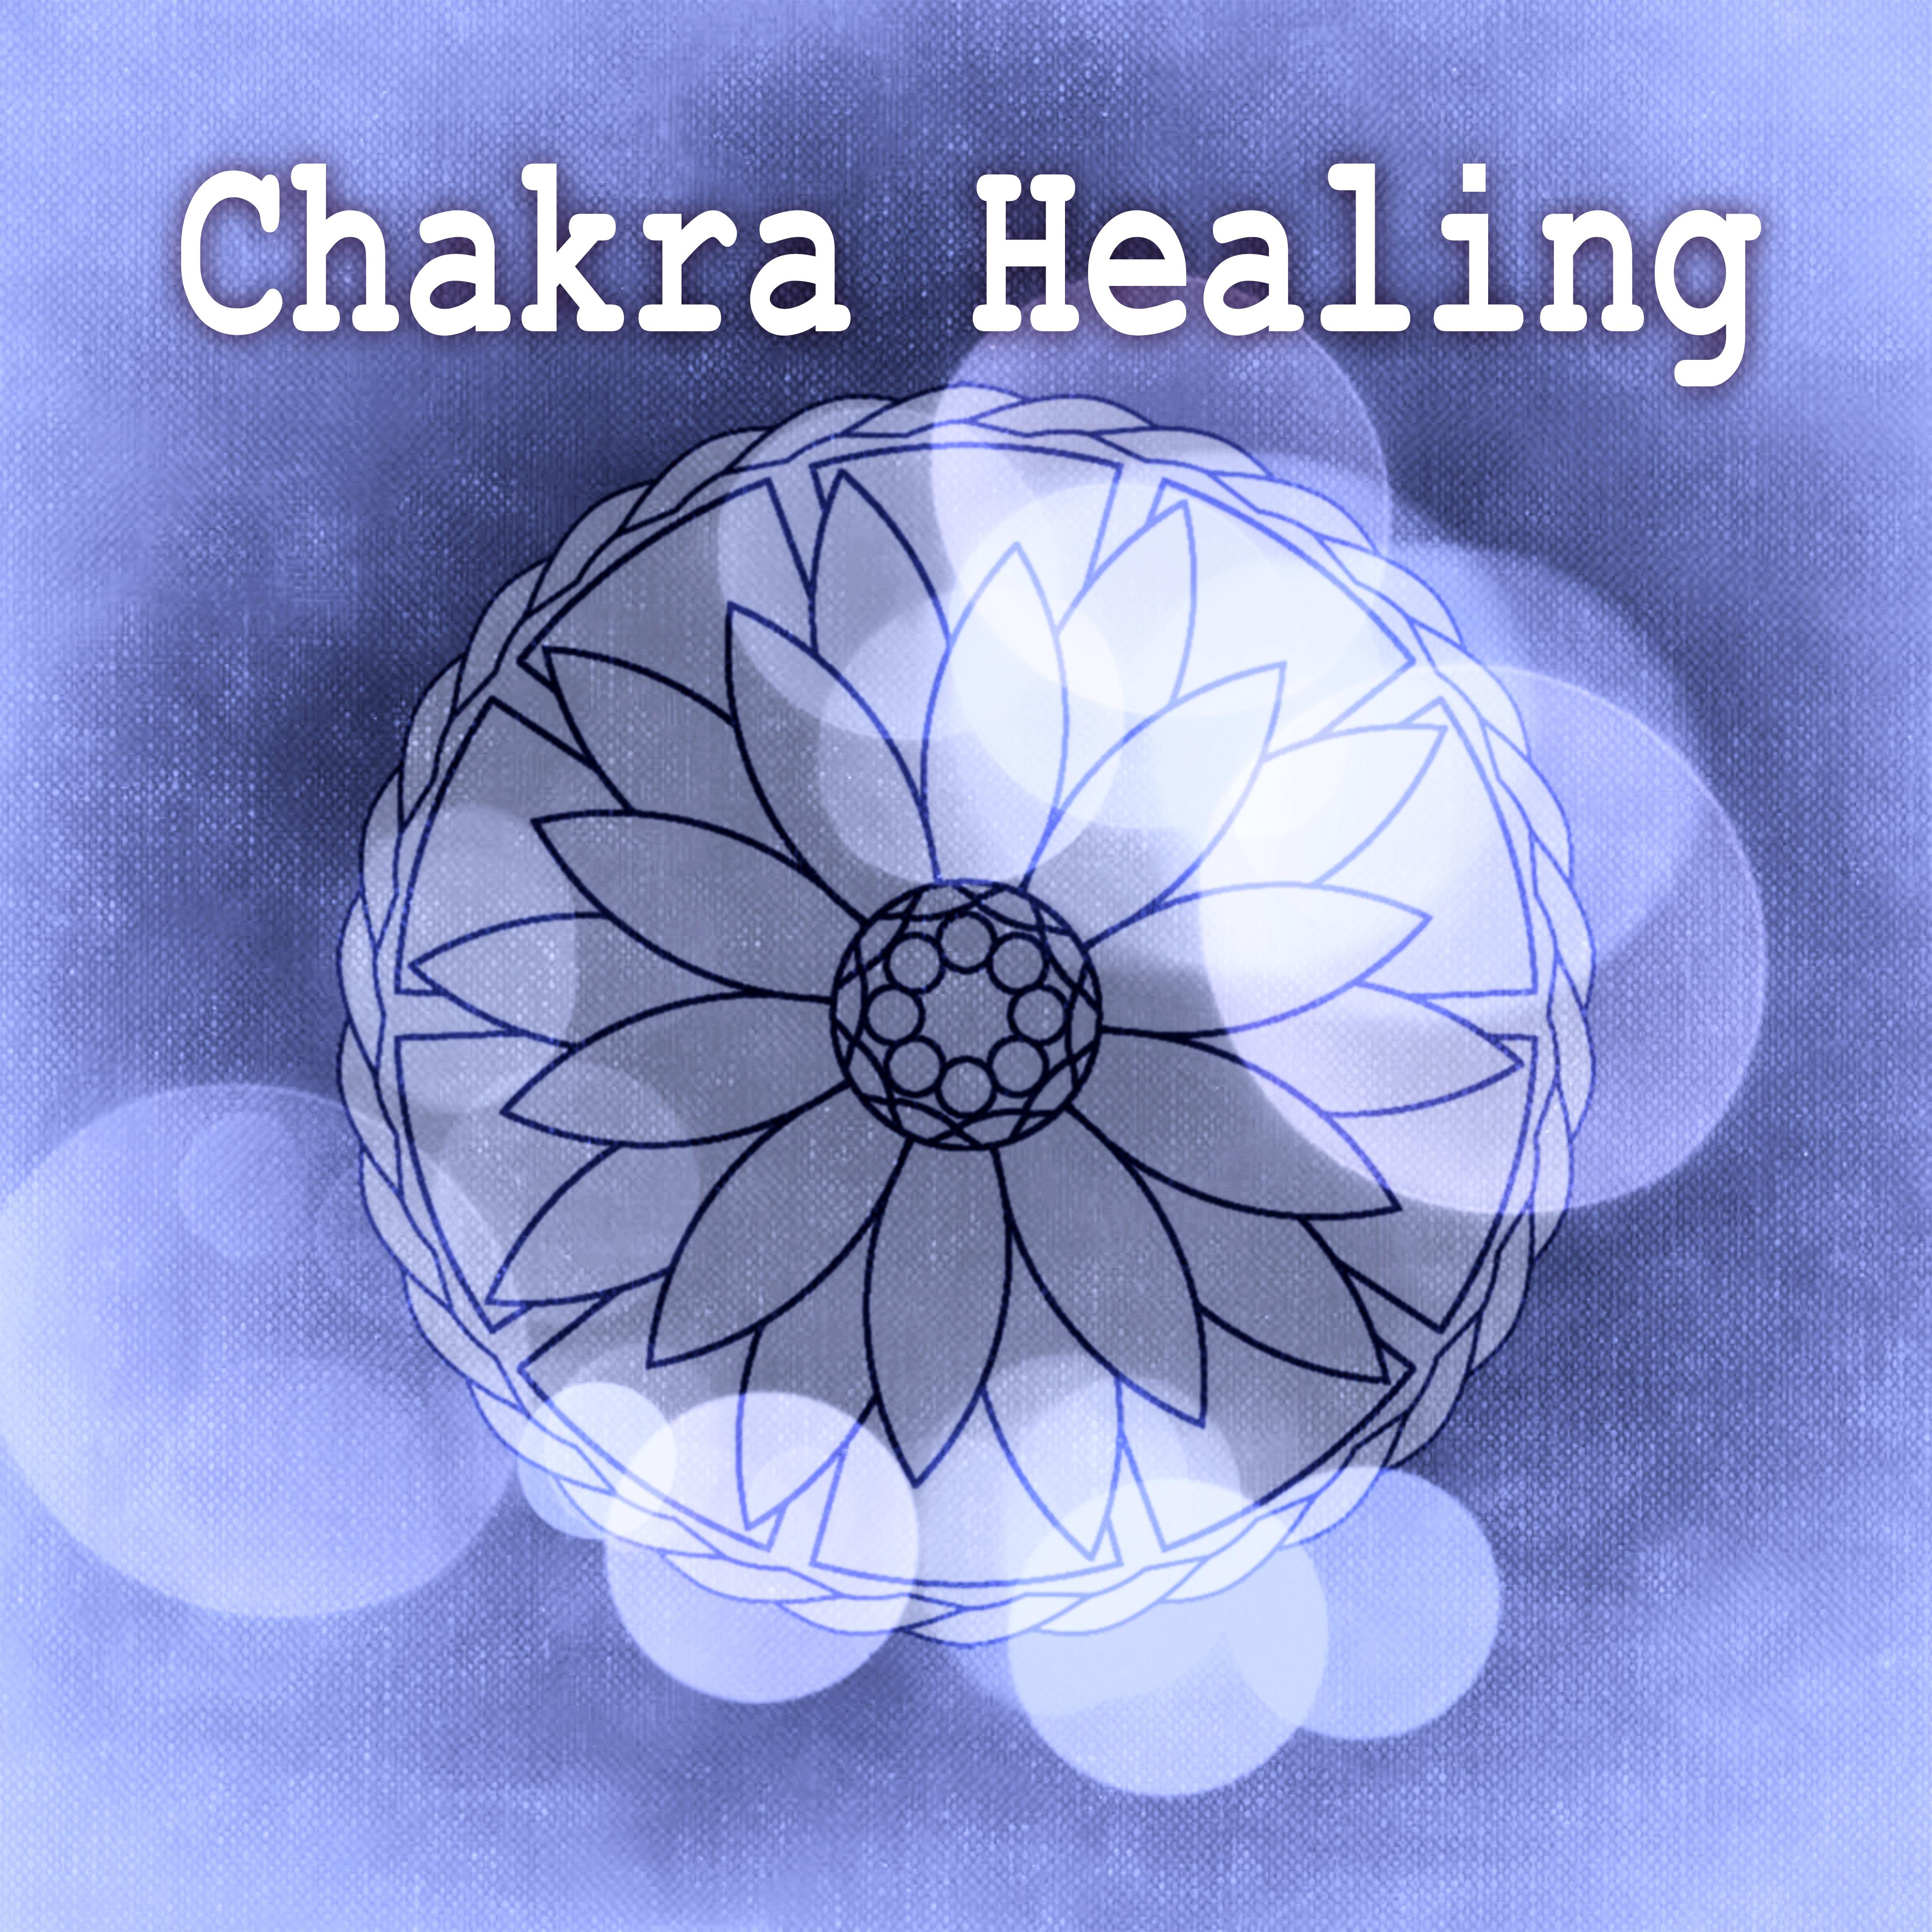 Chakra Healing - Intrumental Music for Healing Meditation and Yoga, Emotional Healing, Health & Healing Relaxation